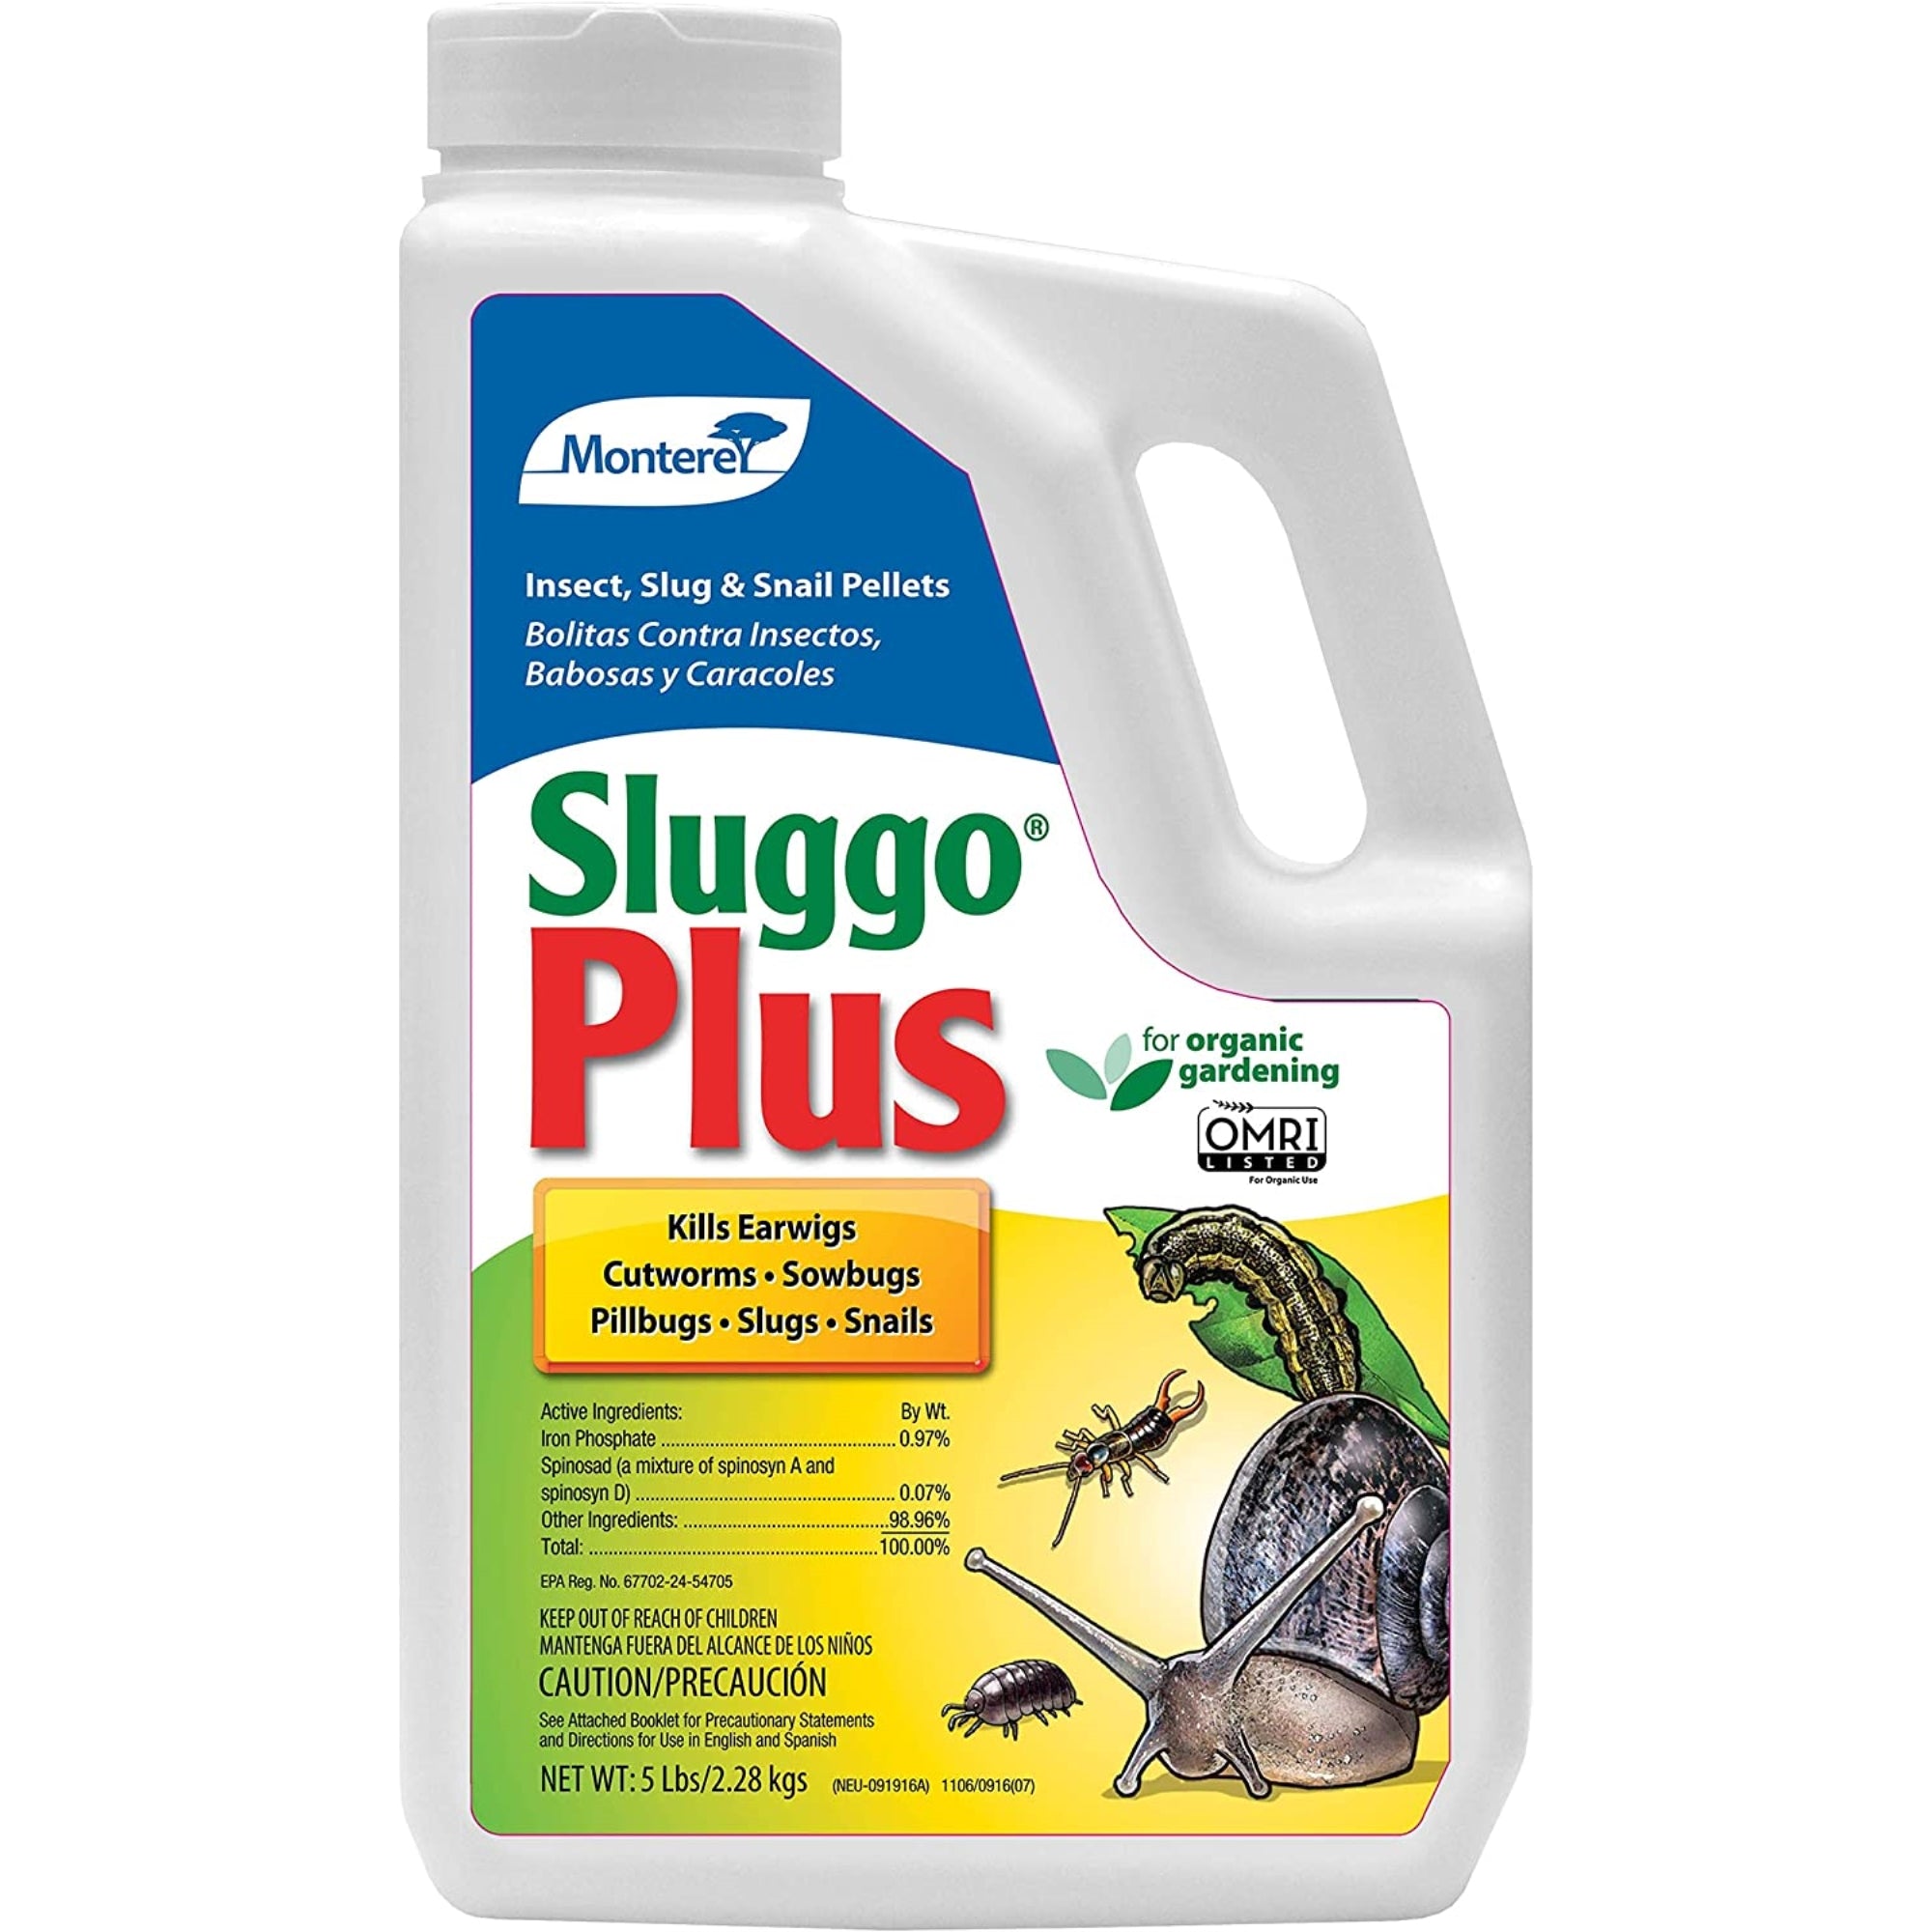 Monterey Sluggo Plus Insect Slug & Snail Killer Bait Organic Wildlife and Pet Safe Slug Killer, 5 lb